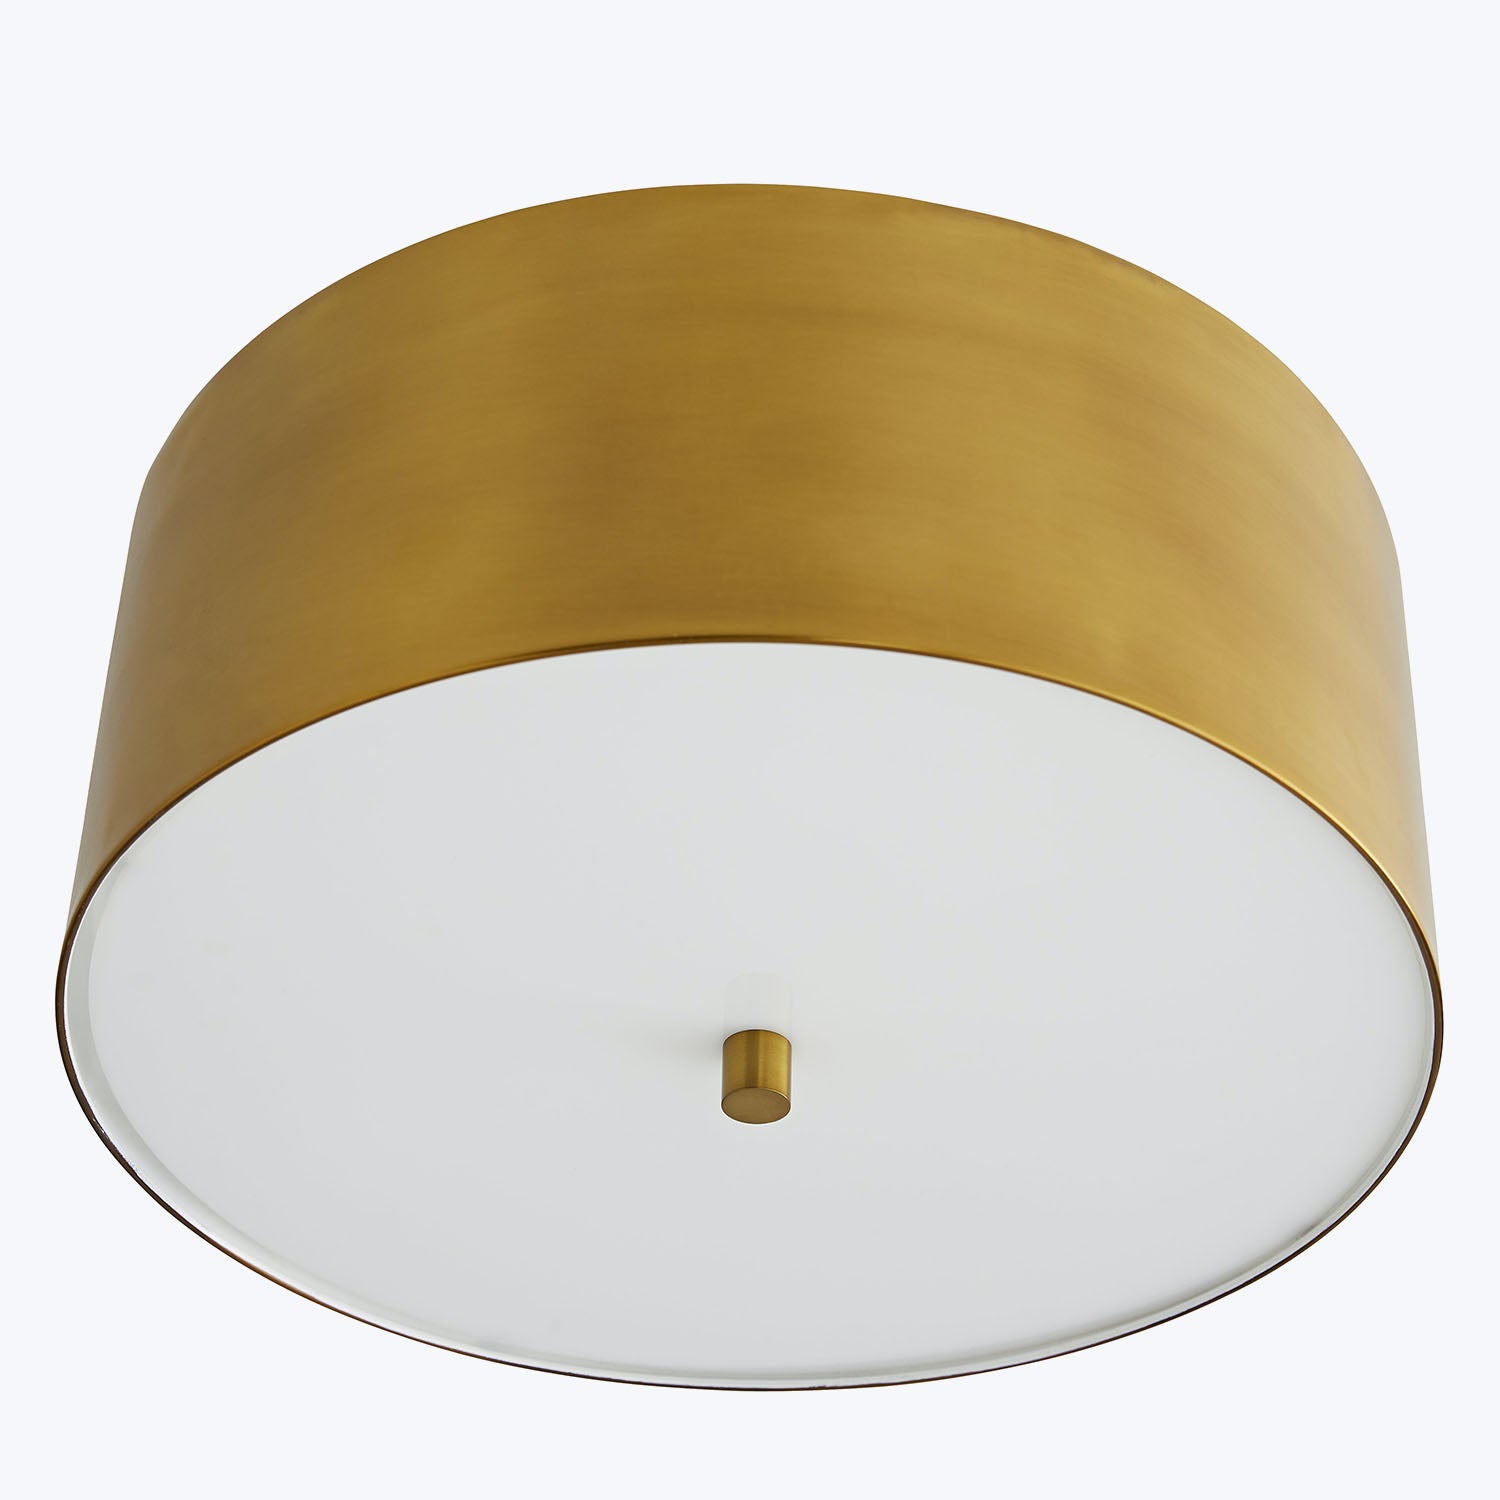 Sleek cylindrical flush mount light fixture with gold exterior finish.